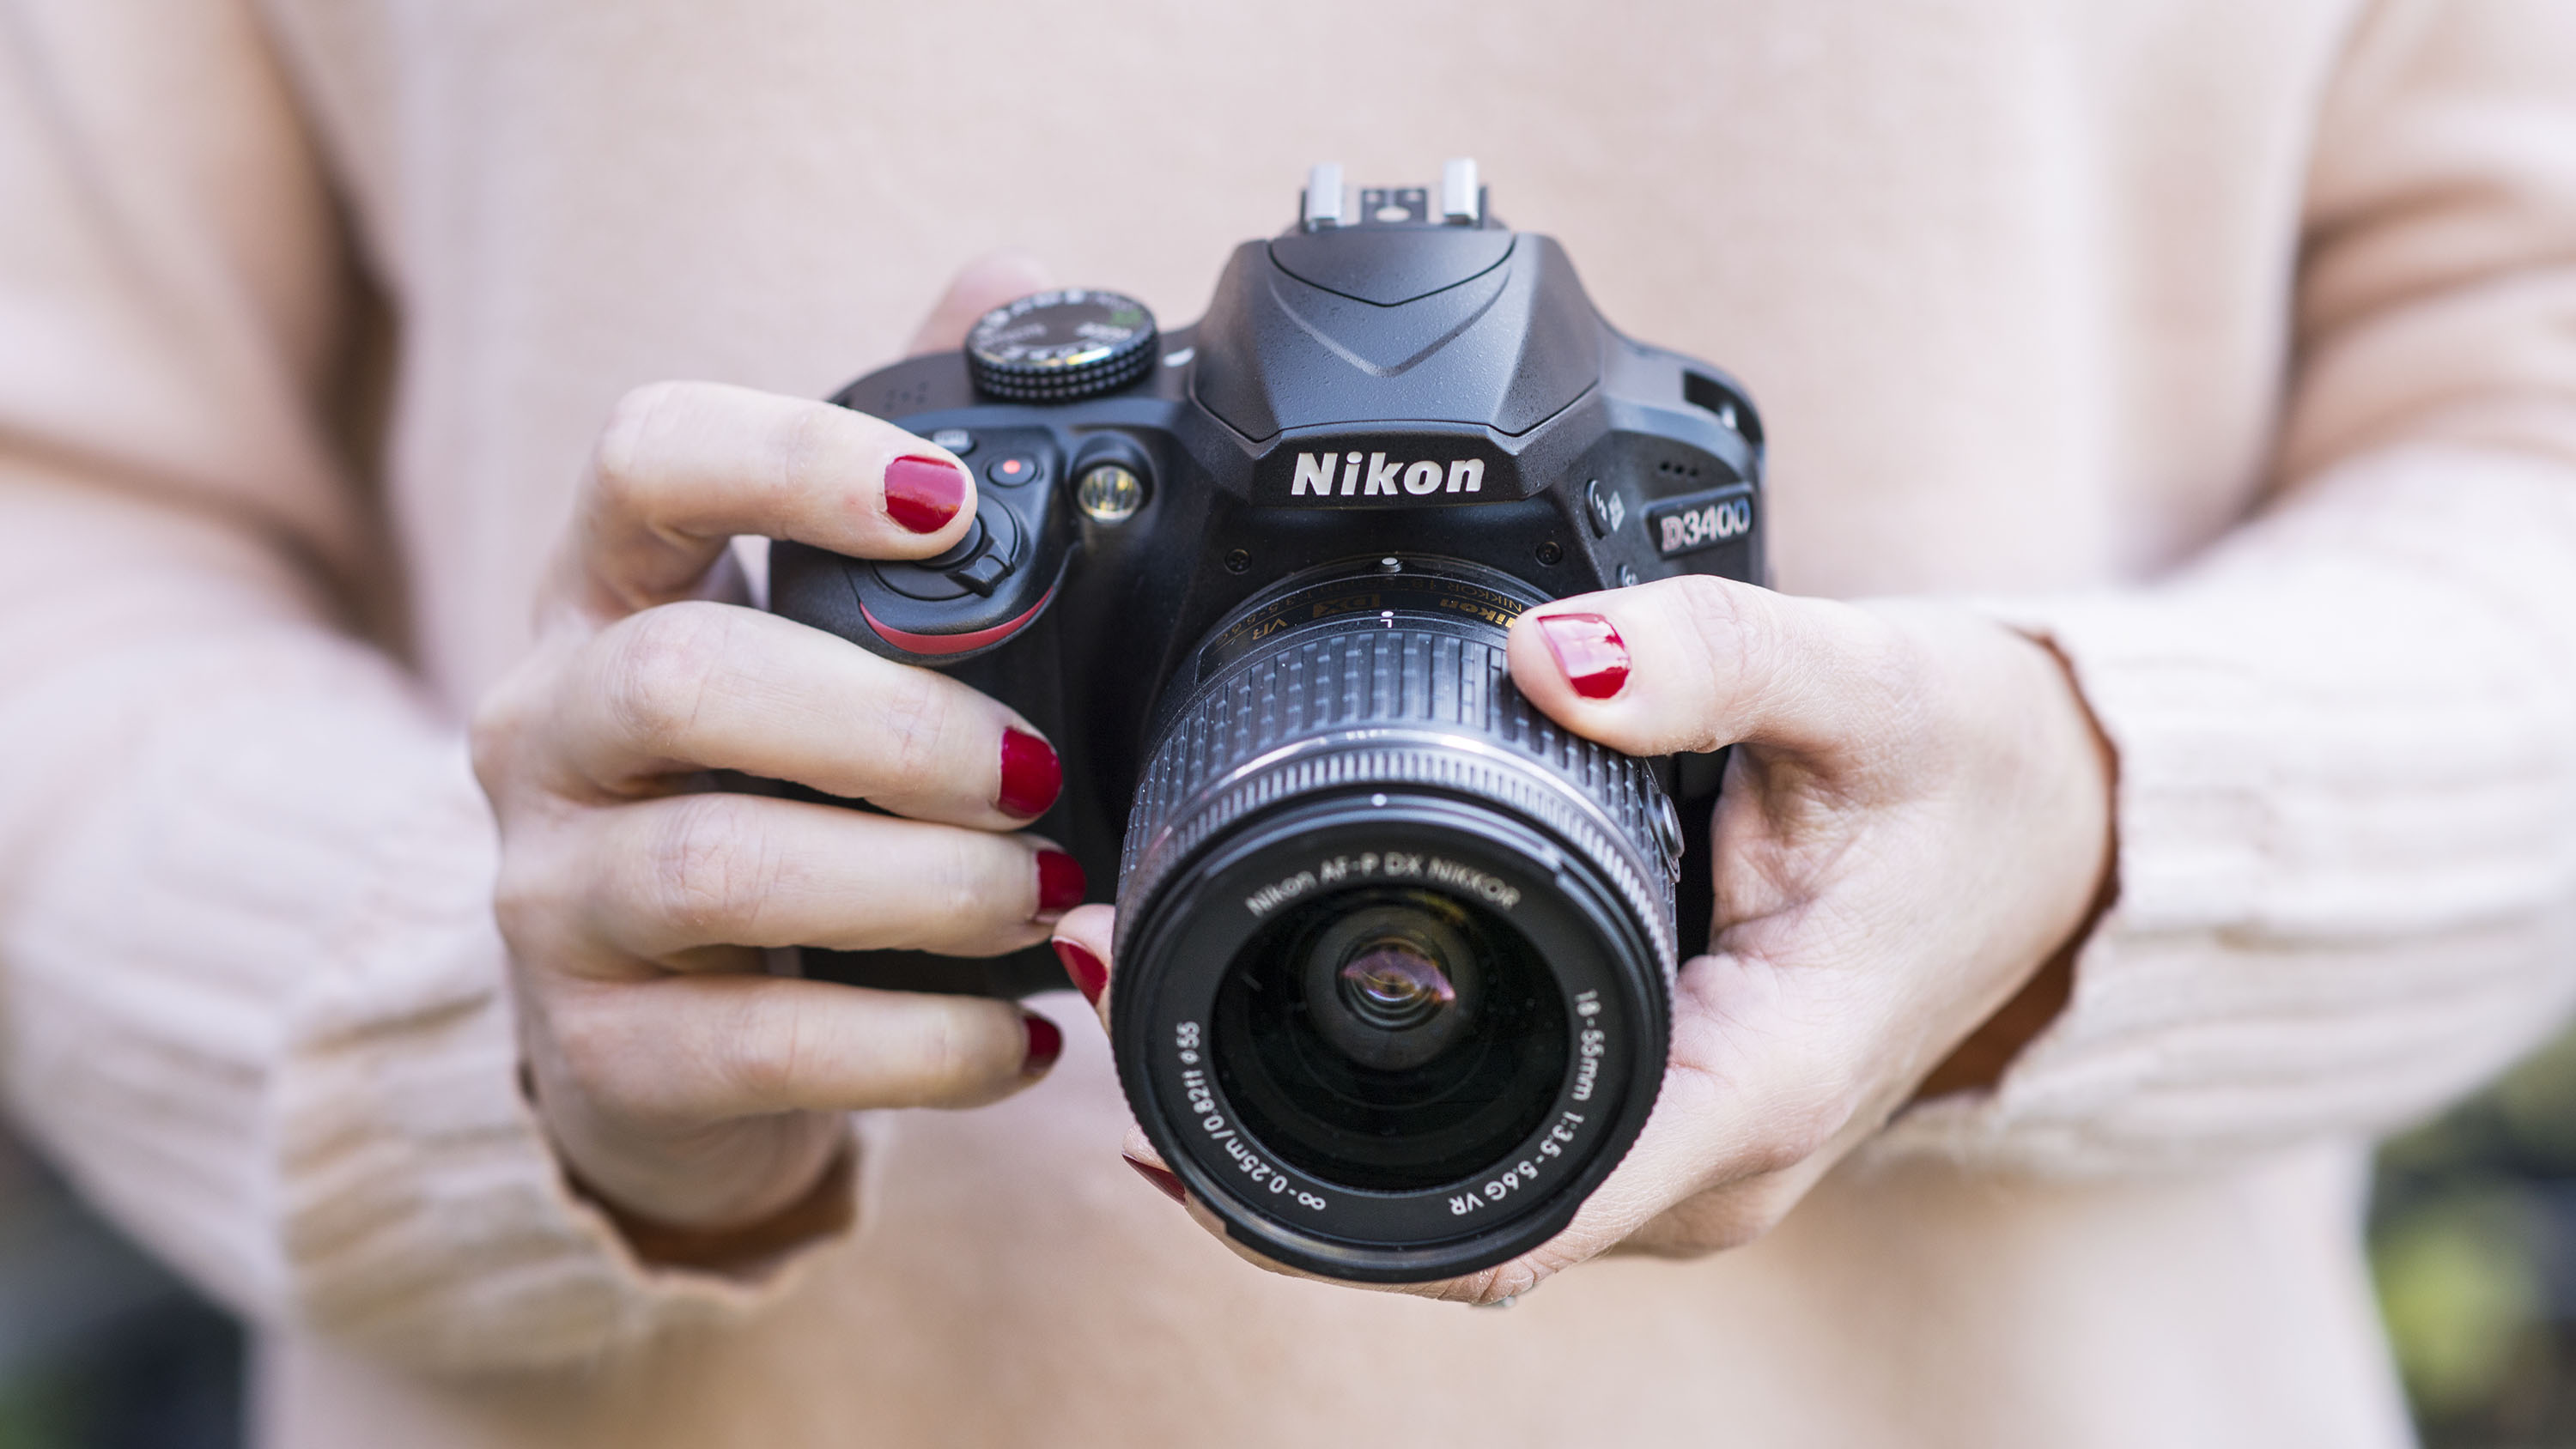 Best camera: Nikon D3400